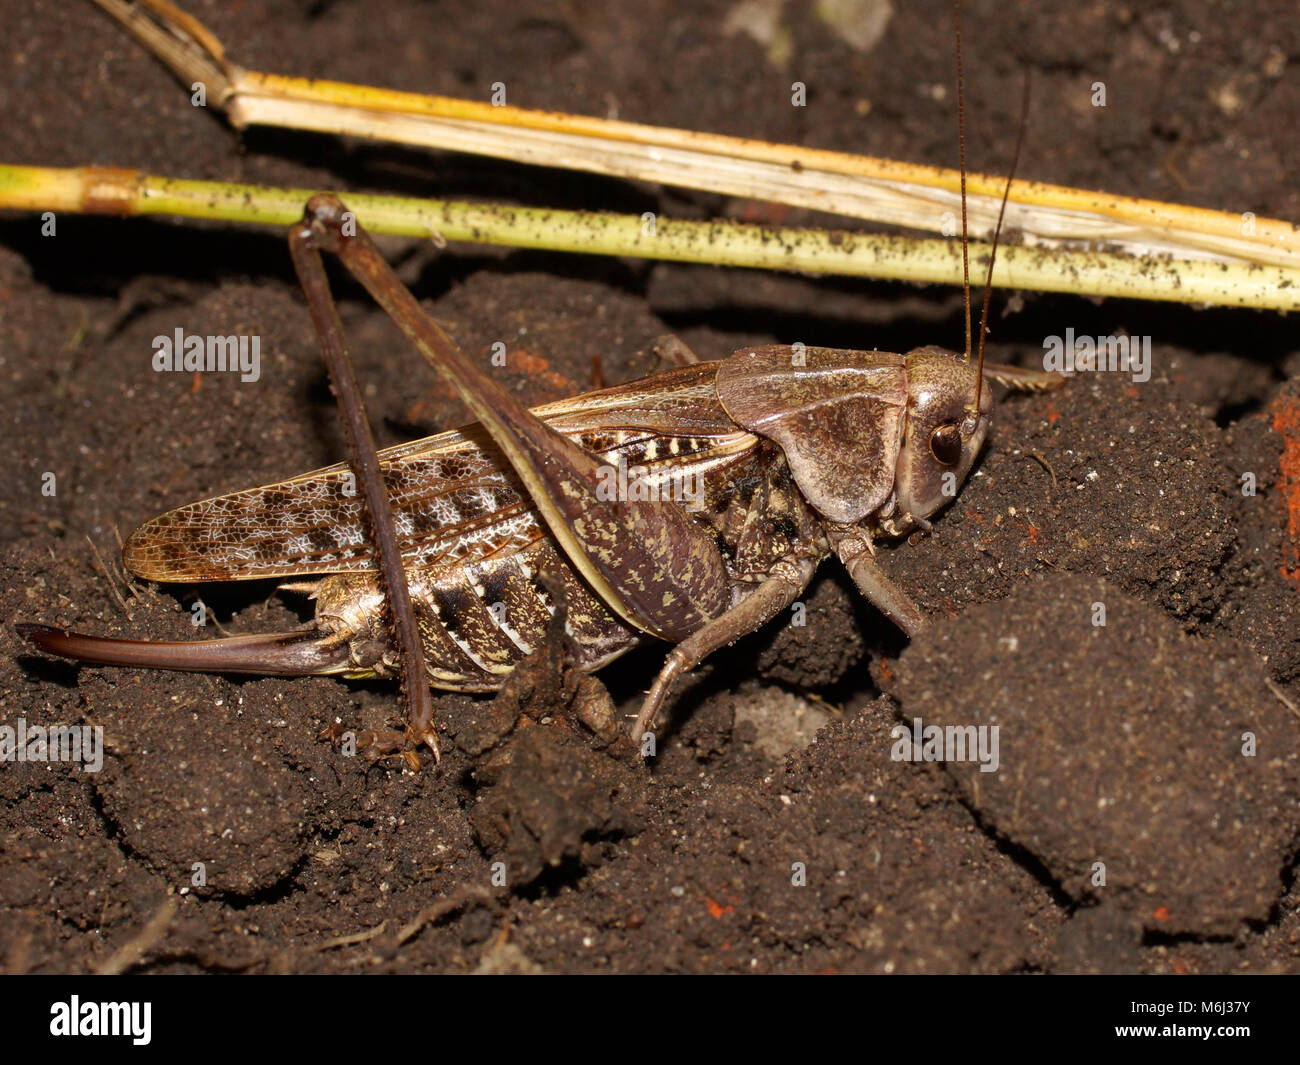 Dectique verrucivore (Decticus verrucivorus) est un bush-cricket dans la famille Tettigoniidae. Le dectique verrucivore pond ses oeufs dans le sol Banque D'Images